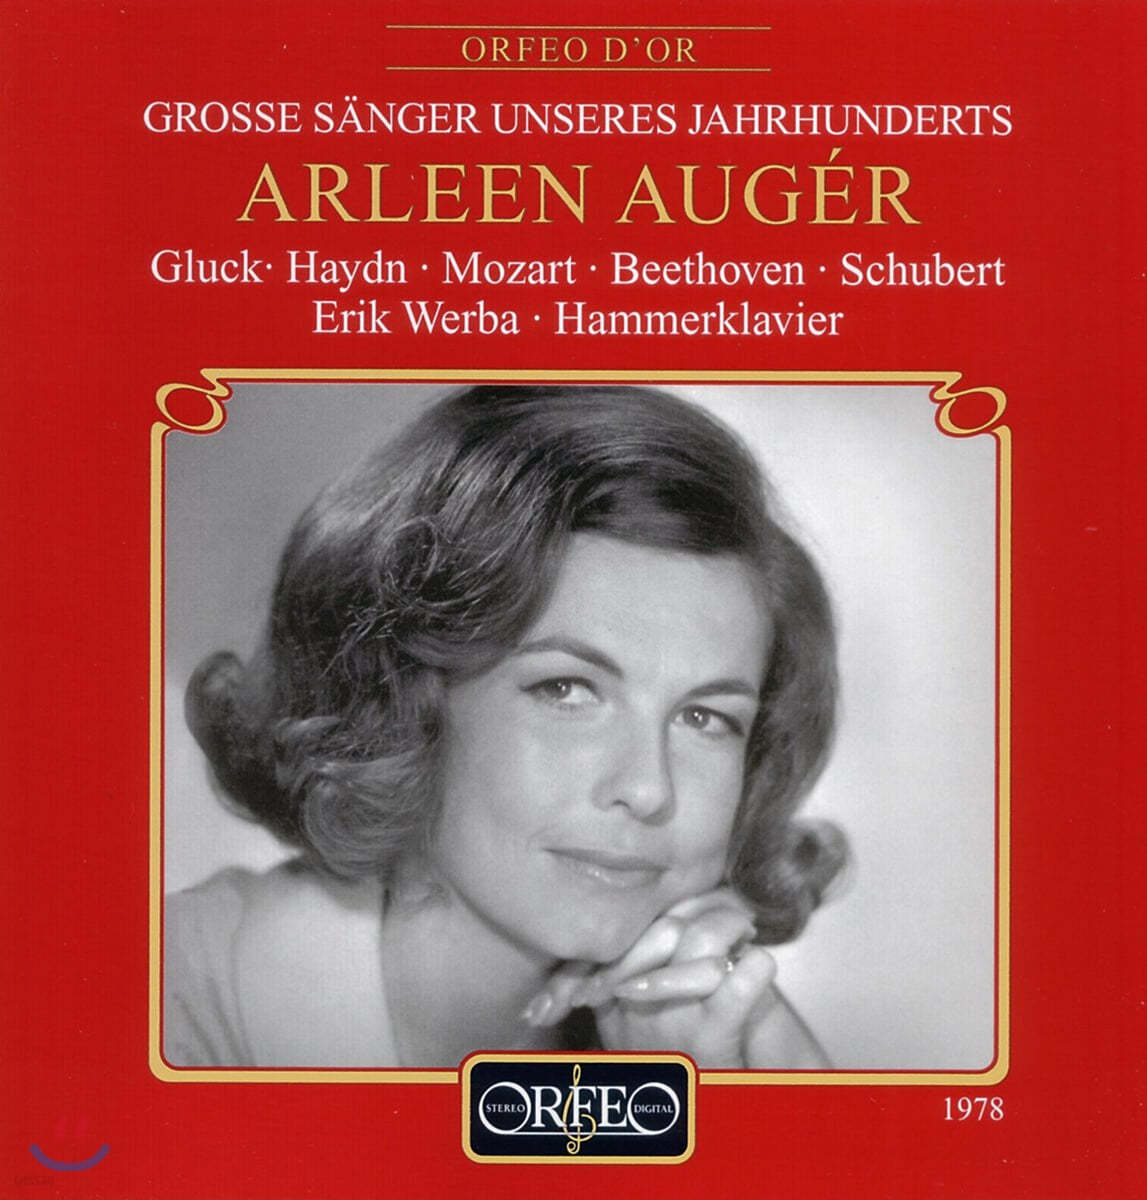 Arleen Auger 글룩 / 하이든 / 모차르트 / 베토벤 / 슈베르트: Arias And Songs 